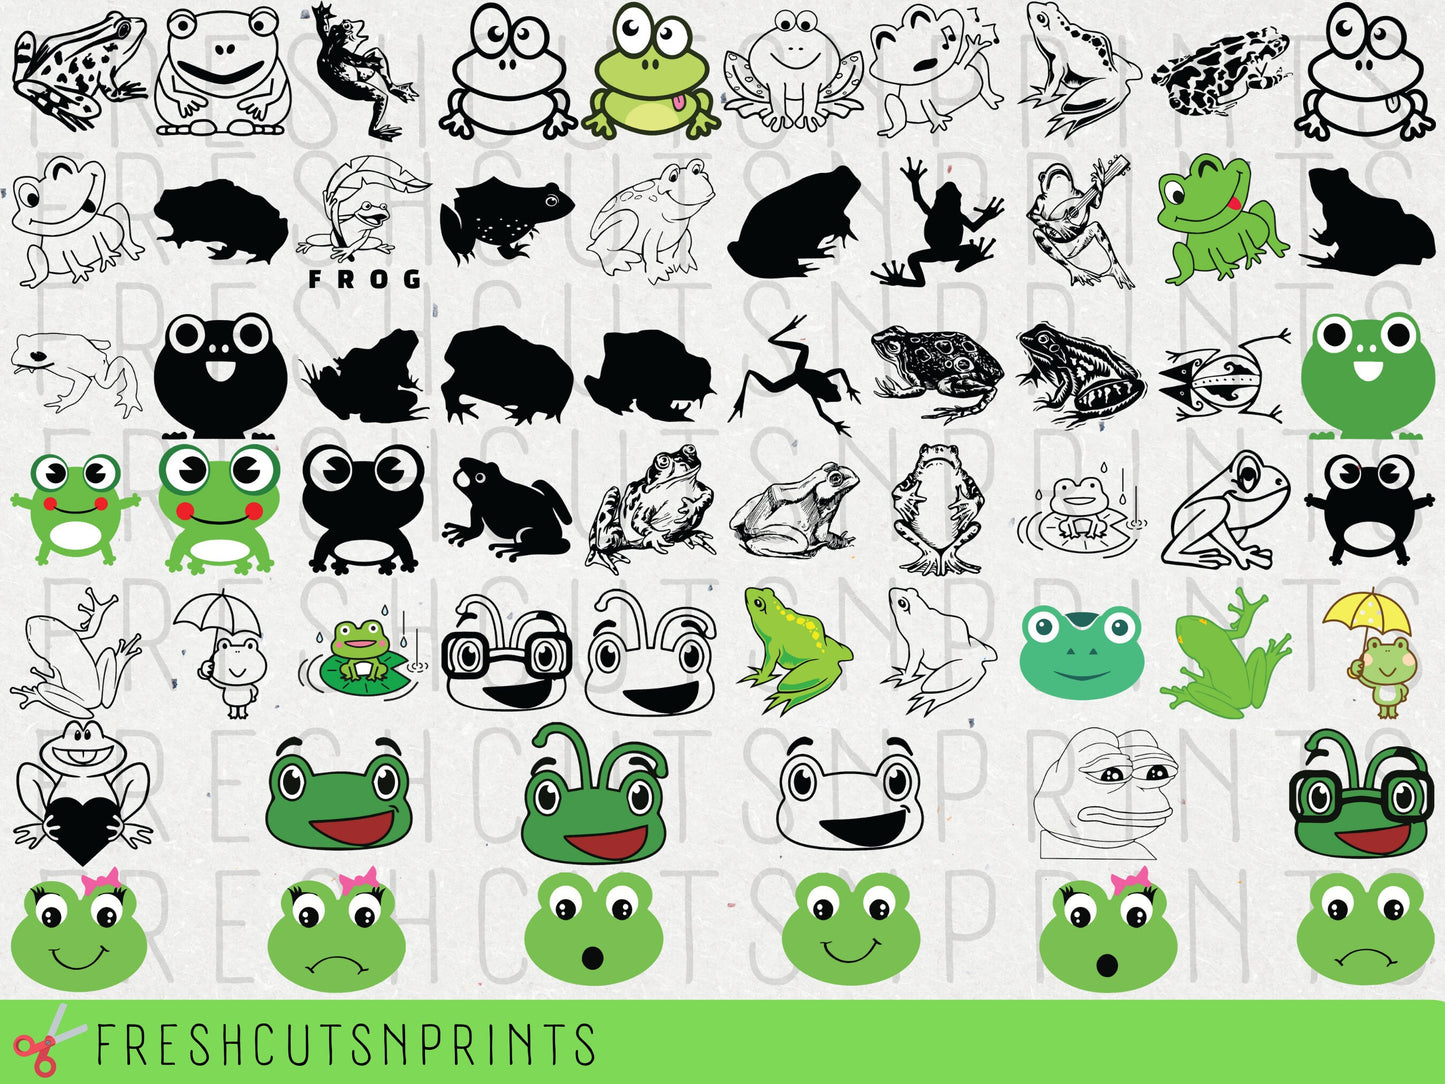 60+ Frog SVG Bundle , Frog clipart, Frog cut files, Frog vector, Frog silhouette, Cartoon Frog svg, Cute frog svg, Frog Face, Commercial Use